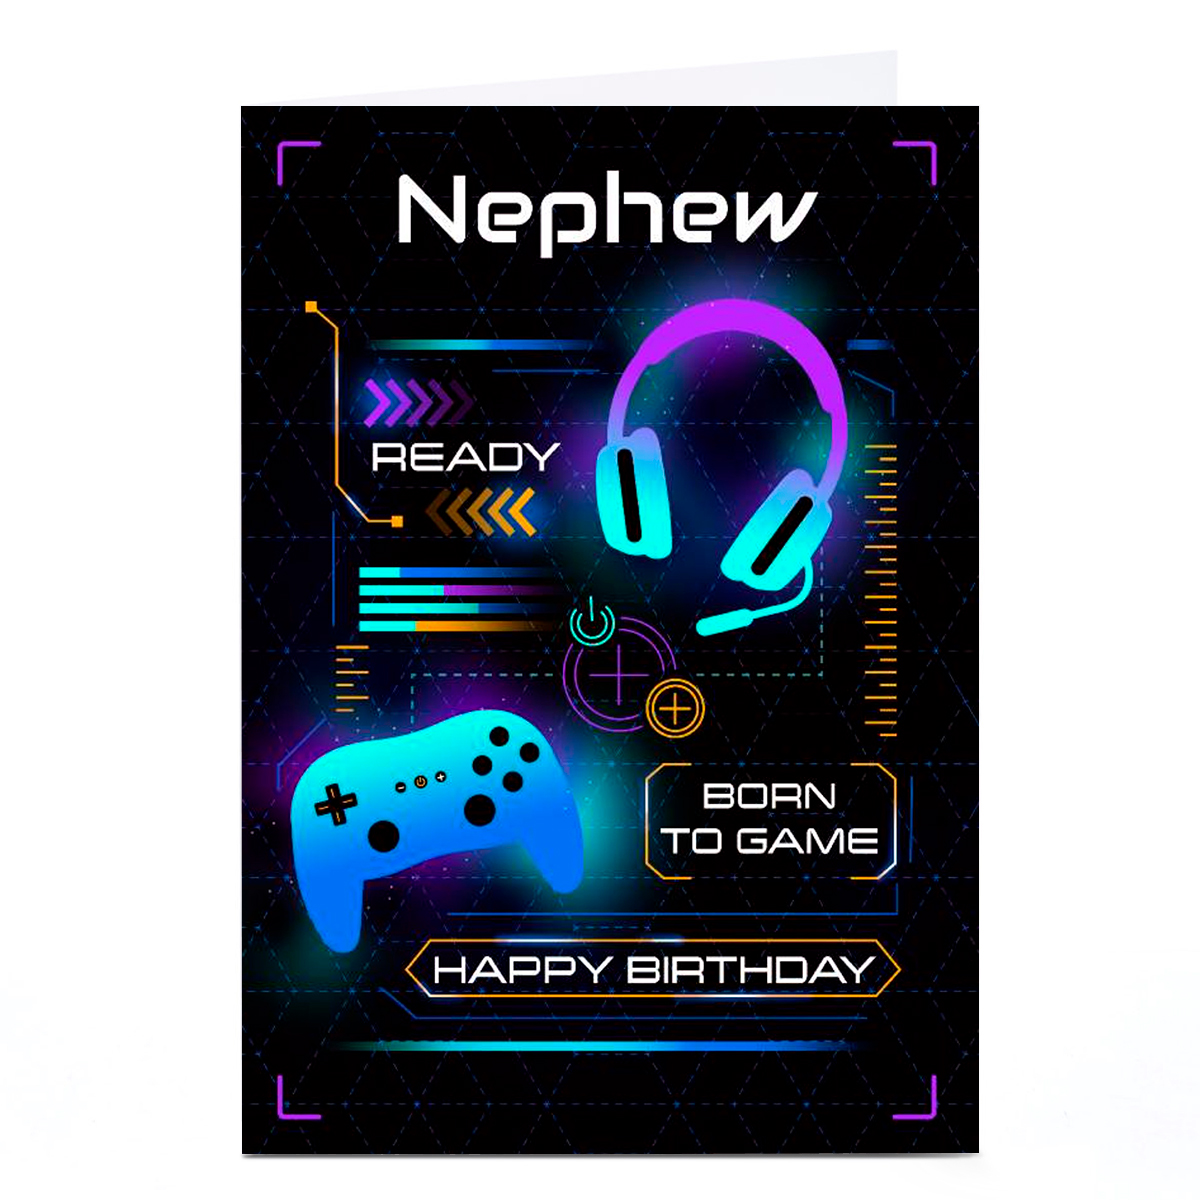 Personalised Birthday Card - Born To Game, Nephew